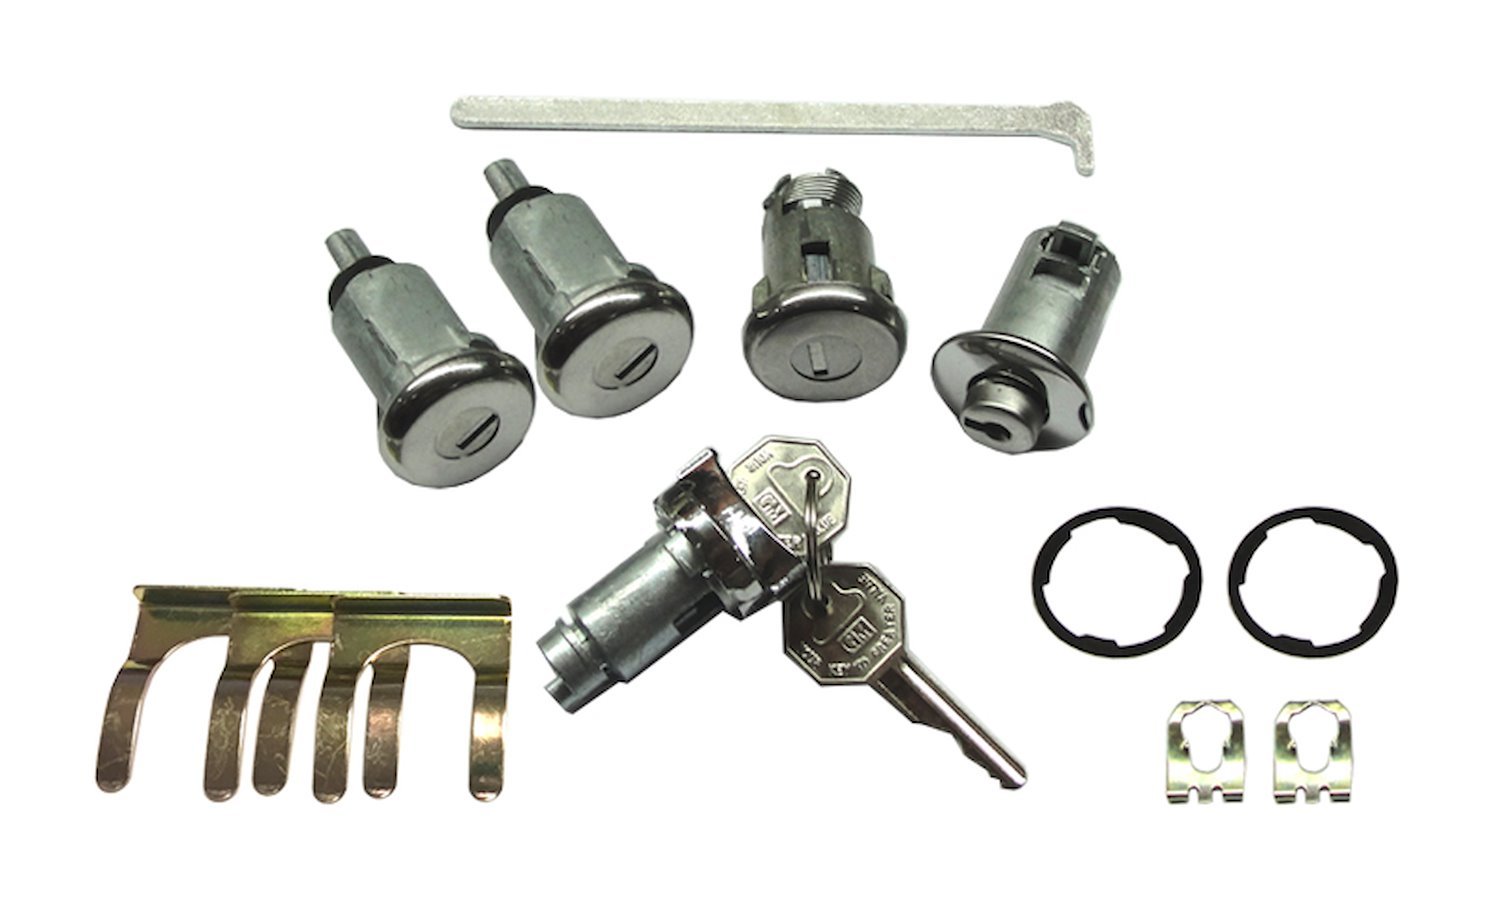 Ignition, Door, Trunk & Glovebox Lock Set Fits Select 1963 GM Models With Short Shaft Cylinders [Original Octagon]